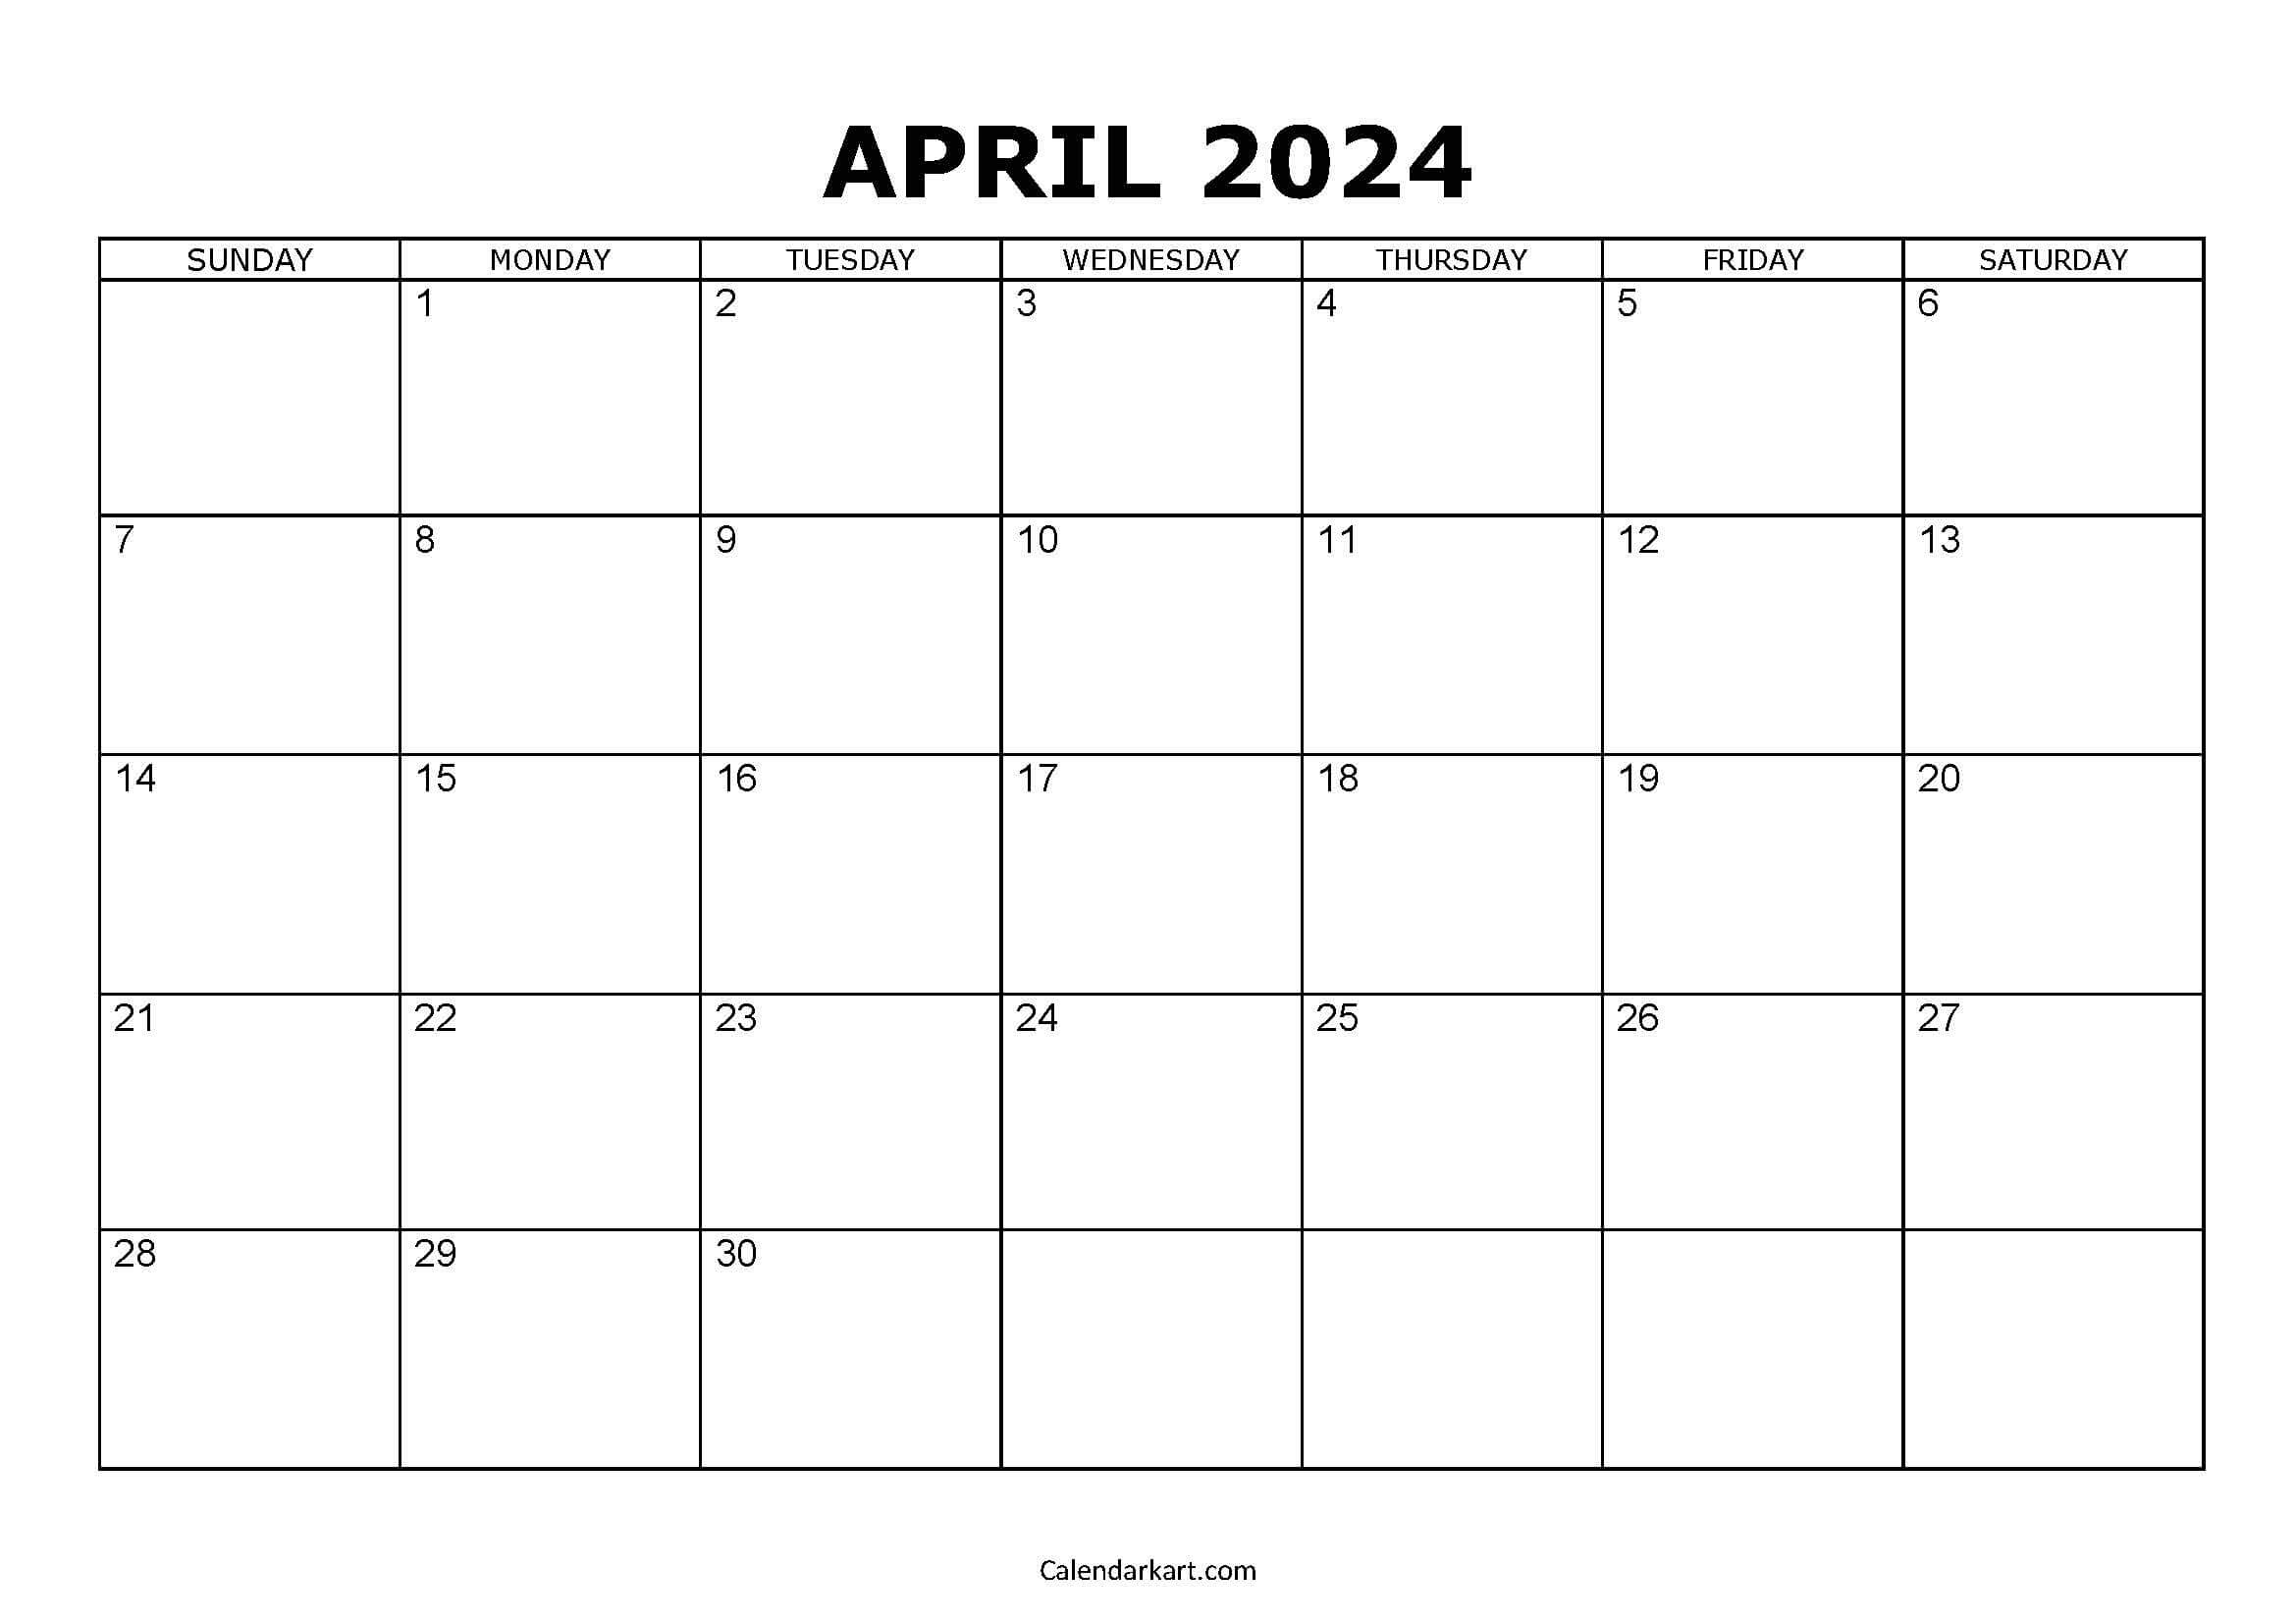 Download Free Printable April 2024 Calendar - Calendarkart with regard to Free Printable April 2024 Calendar Amazing Designs